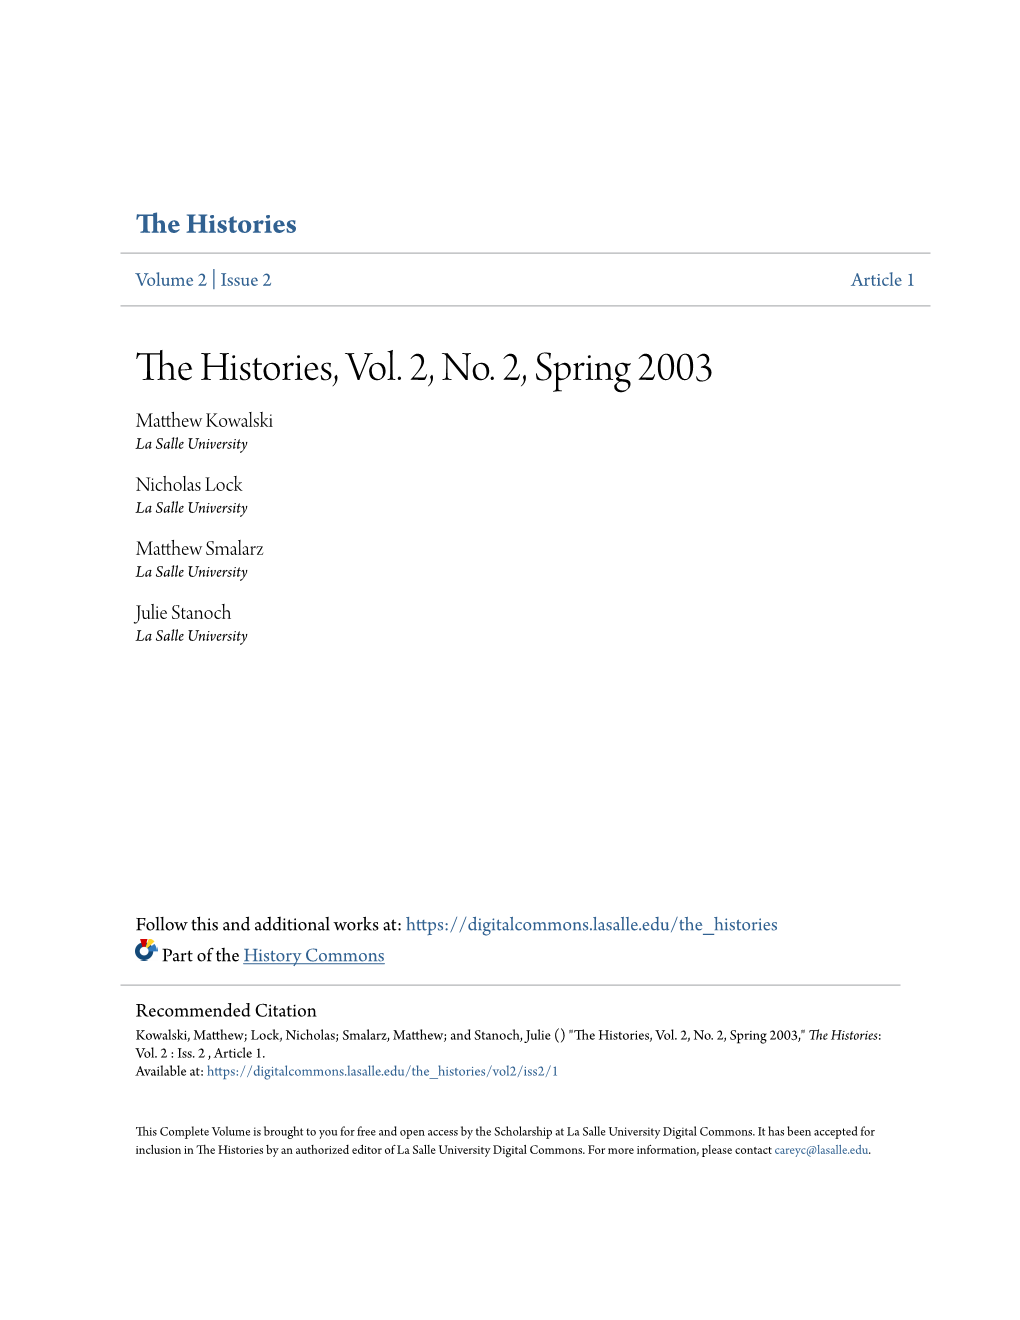 The Histories, Vol. 2, No. 2, Spring 2003